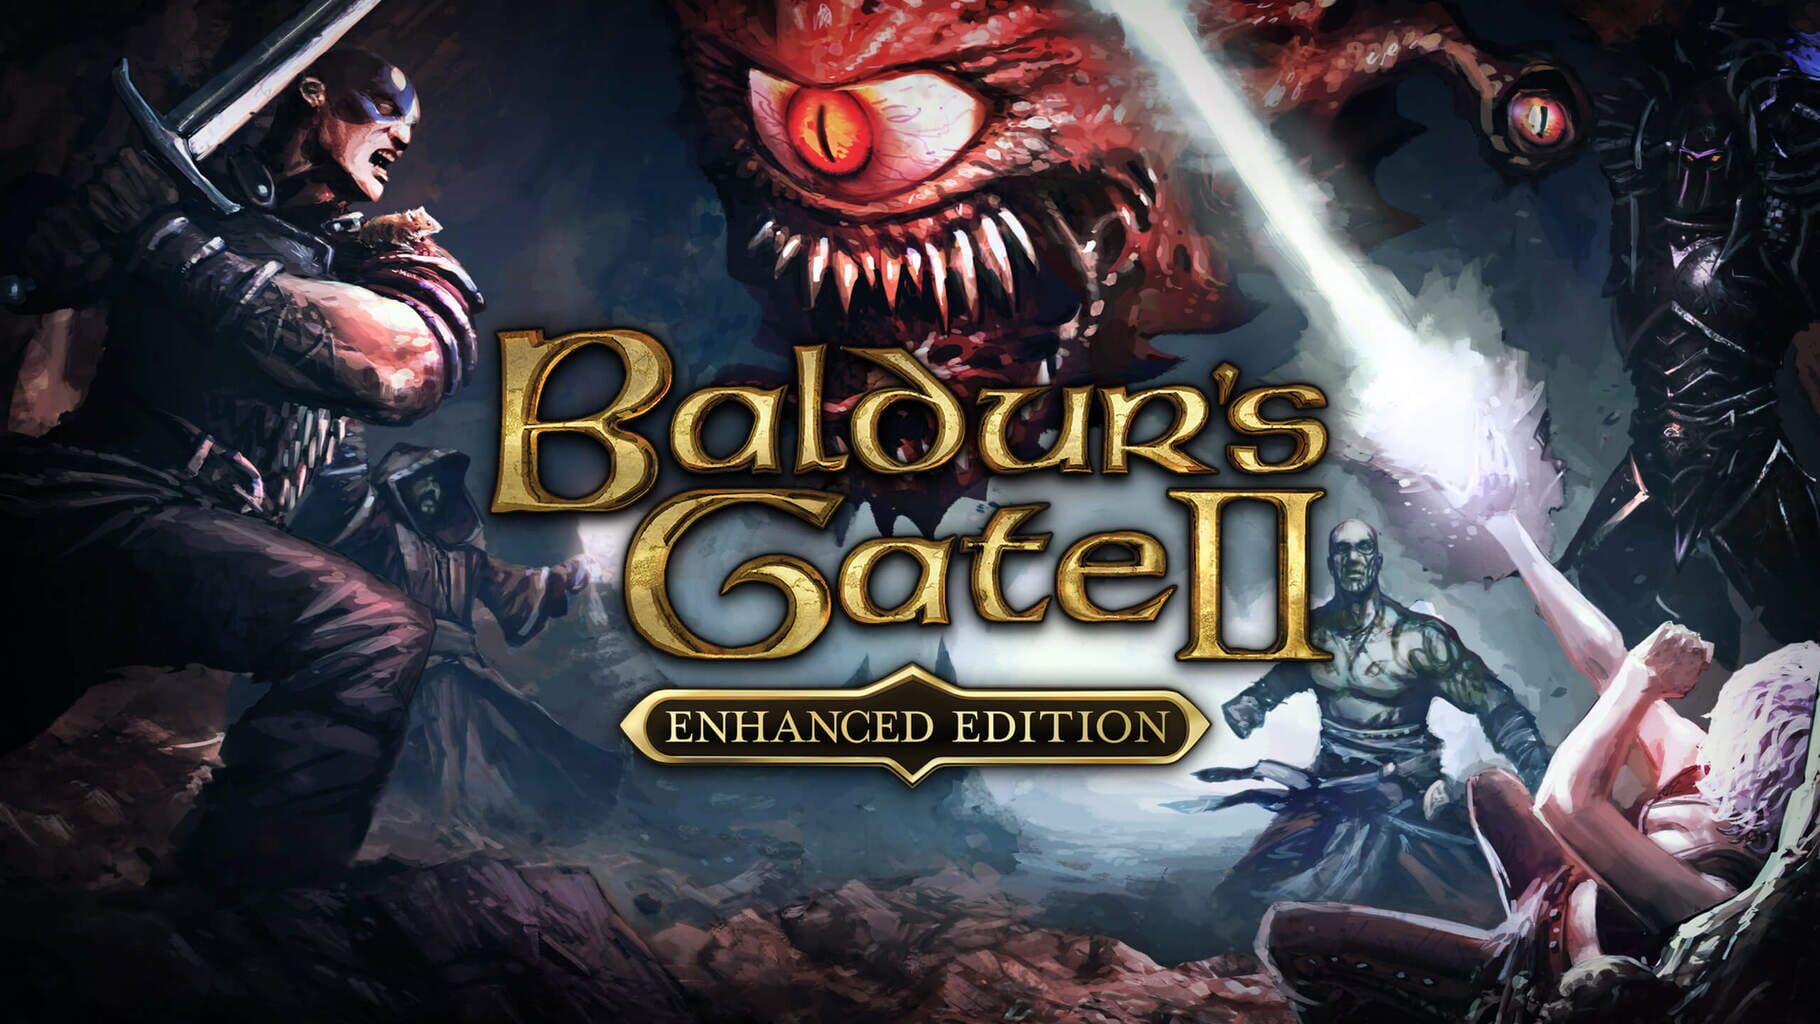 Arte - Baldur's Gate II: Enhanced Edition